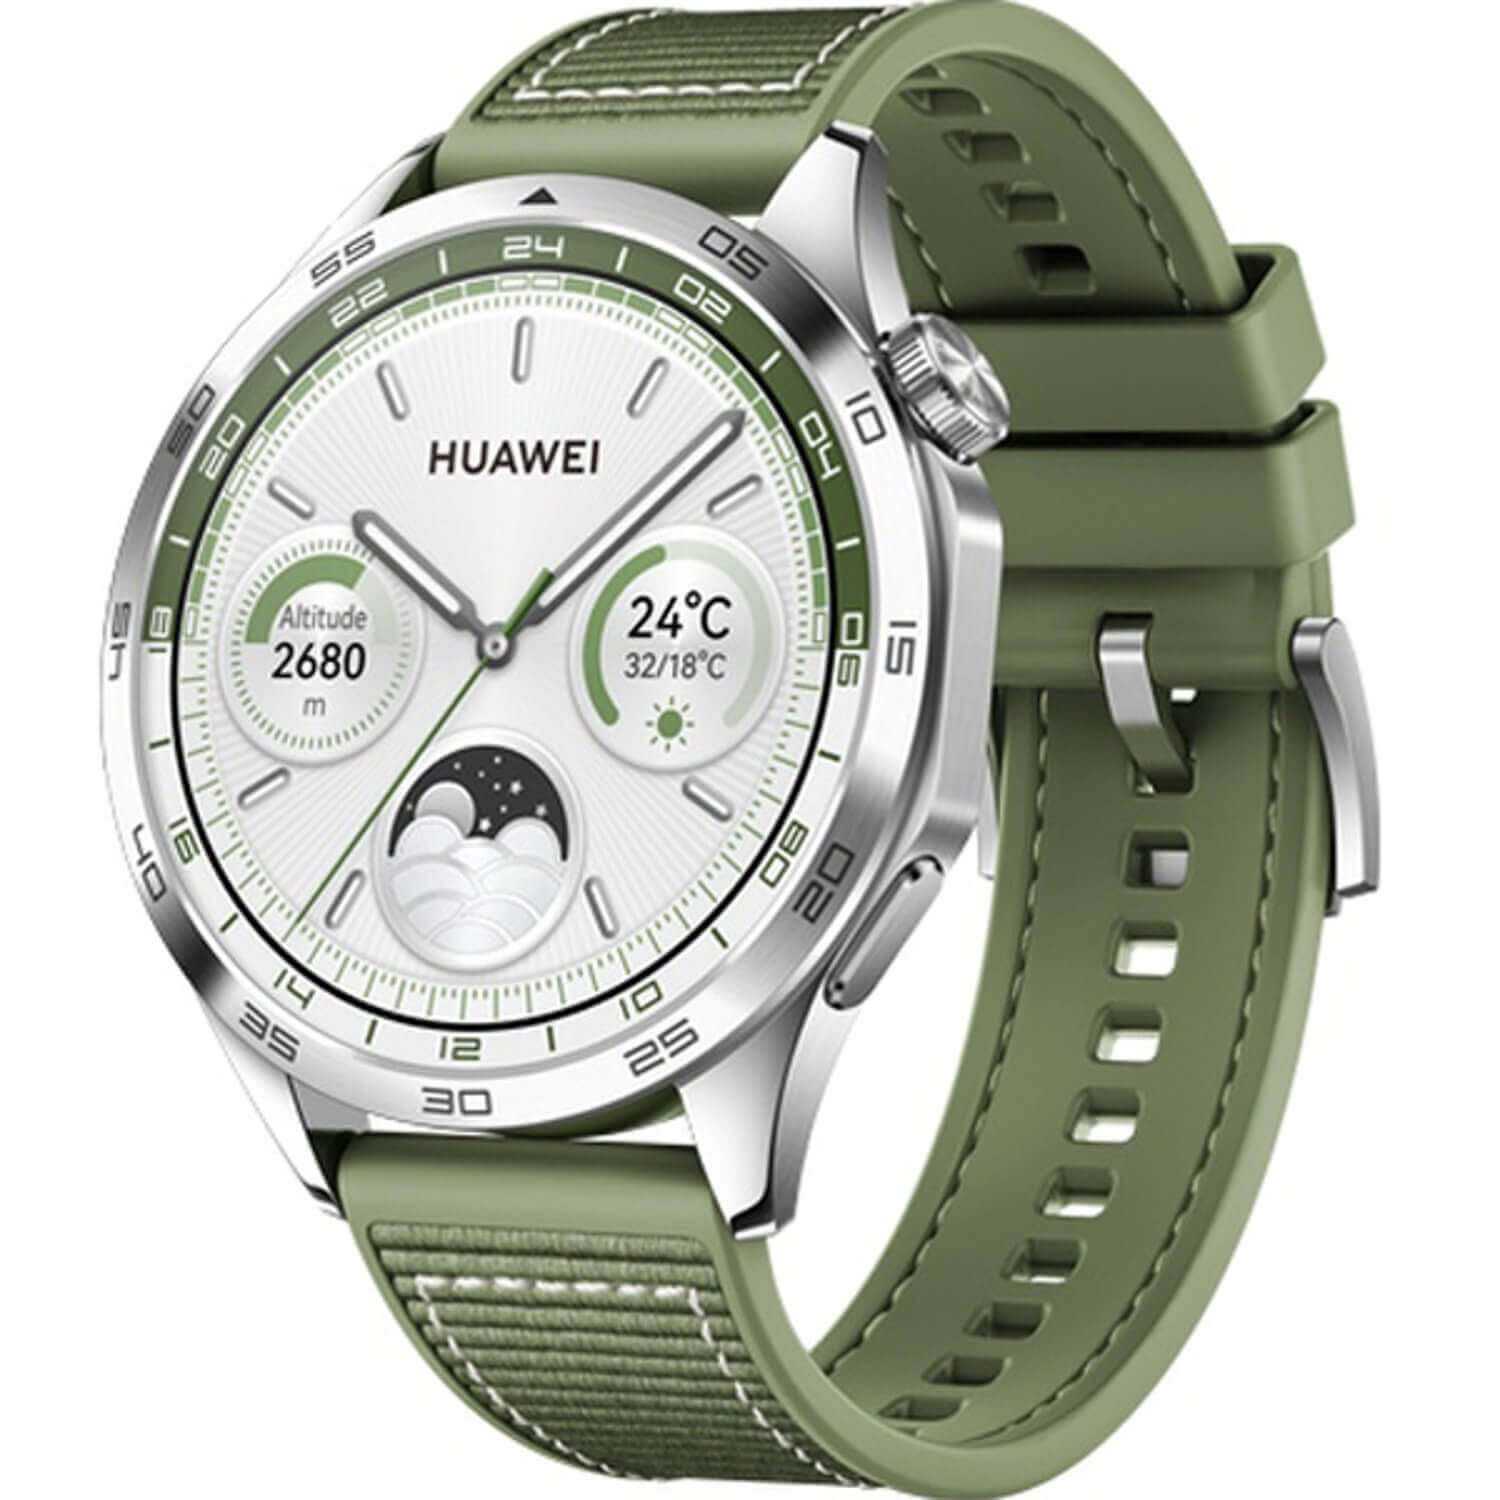 Buy huawei watch GT4 online in pakistan at Globaltelecompk